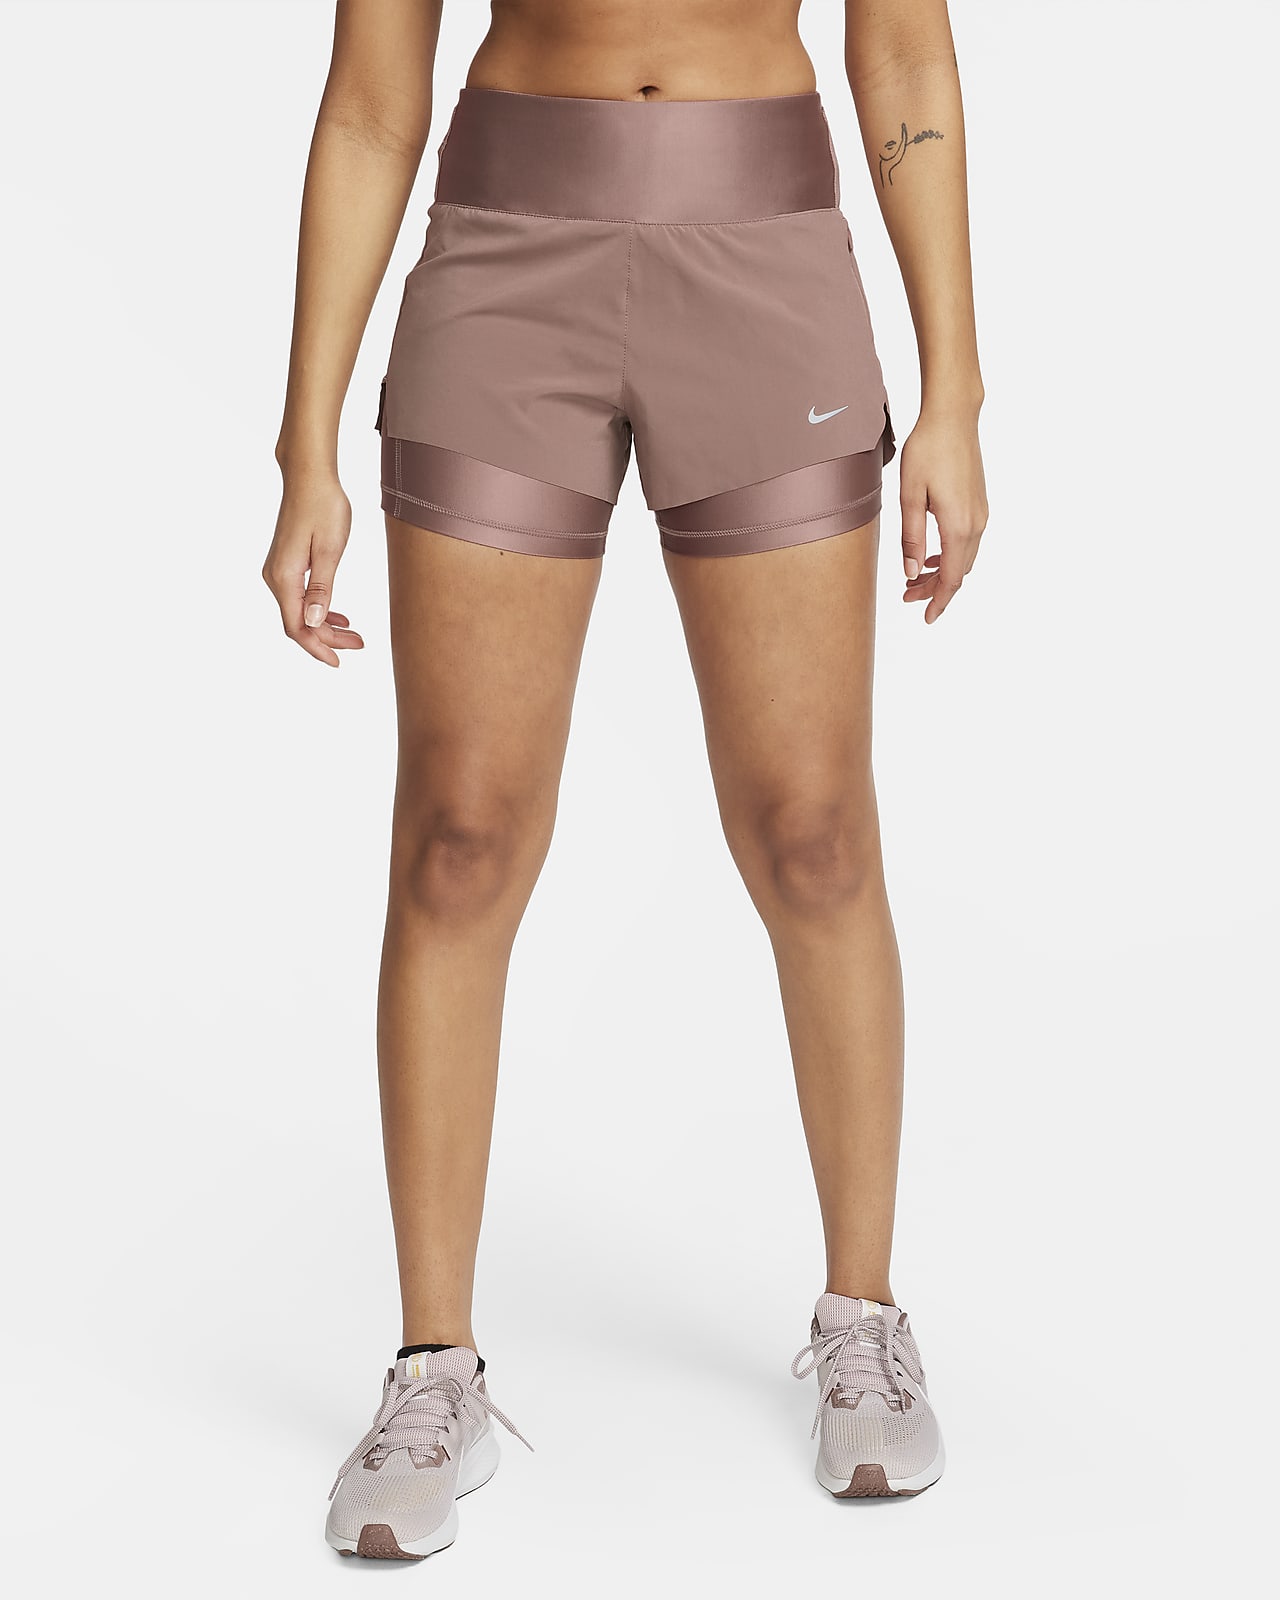 Nike Women’s Pink/Gray Dri-Fit Running Shorts W/ Built In Underwear Size XS  